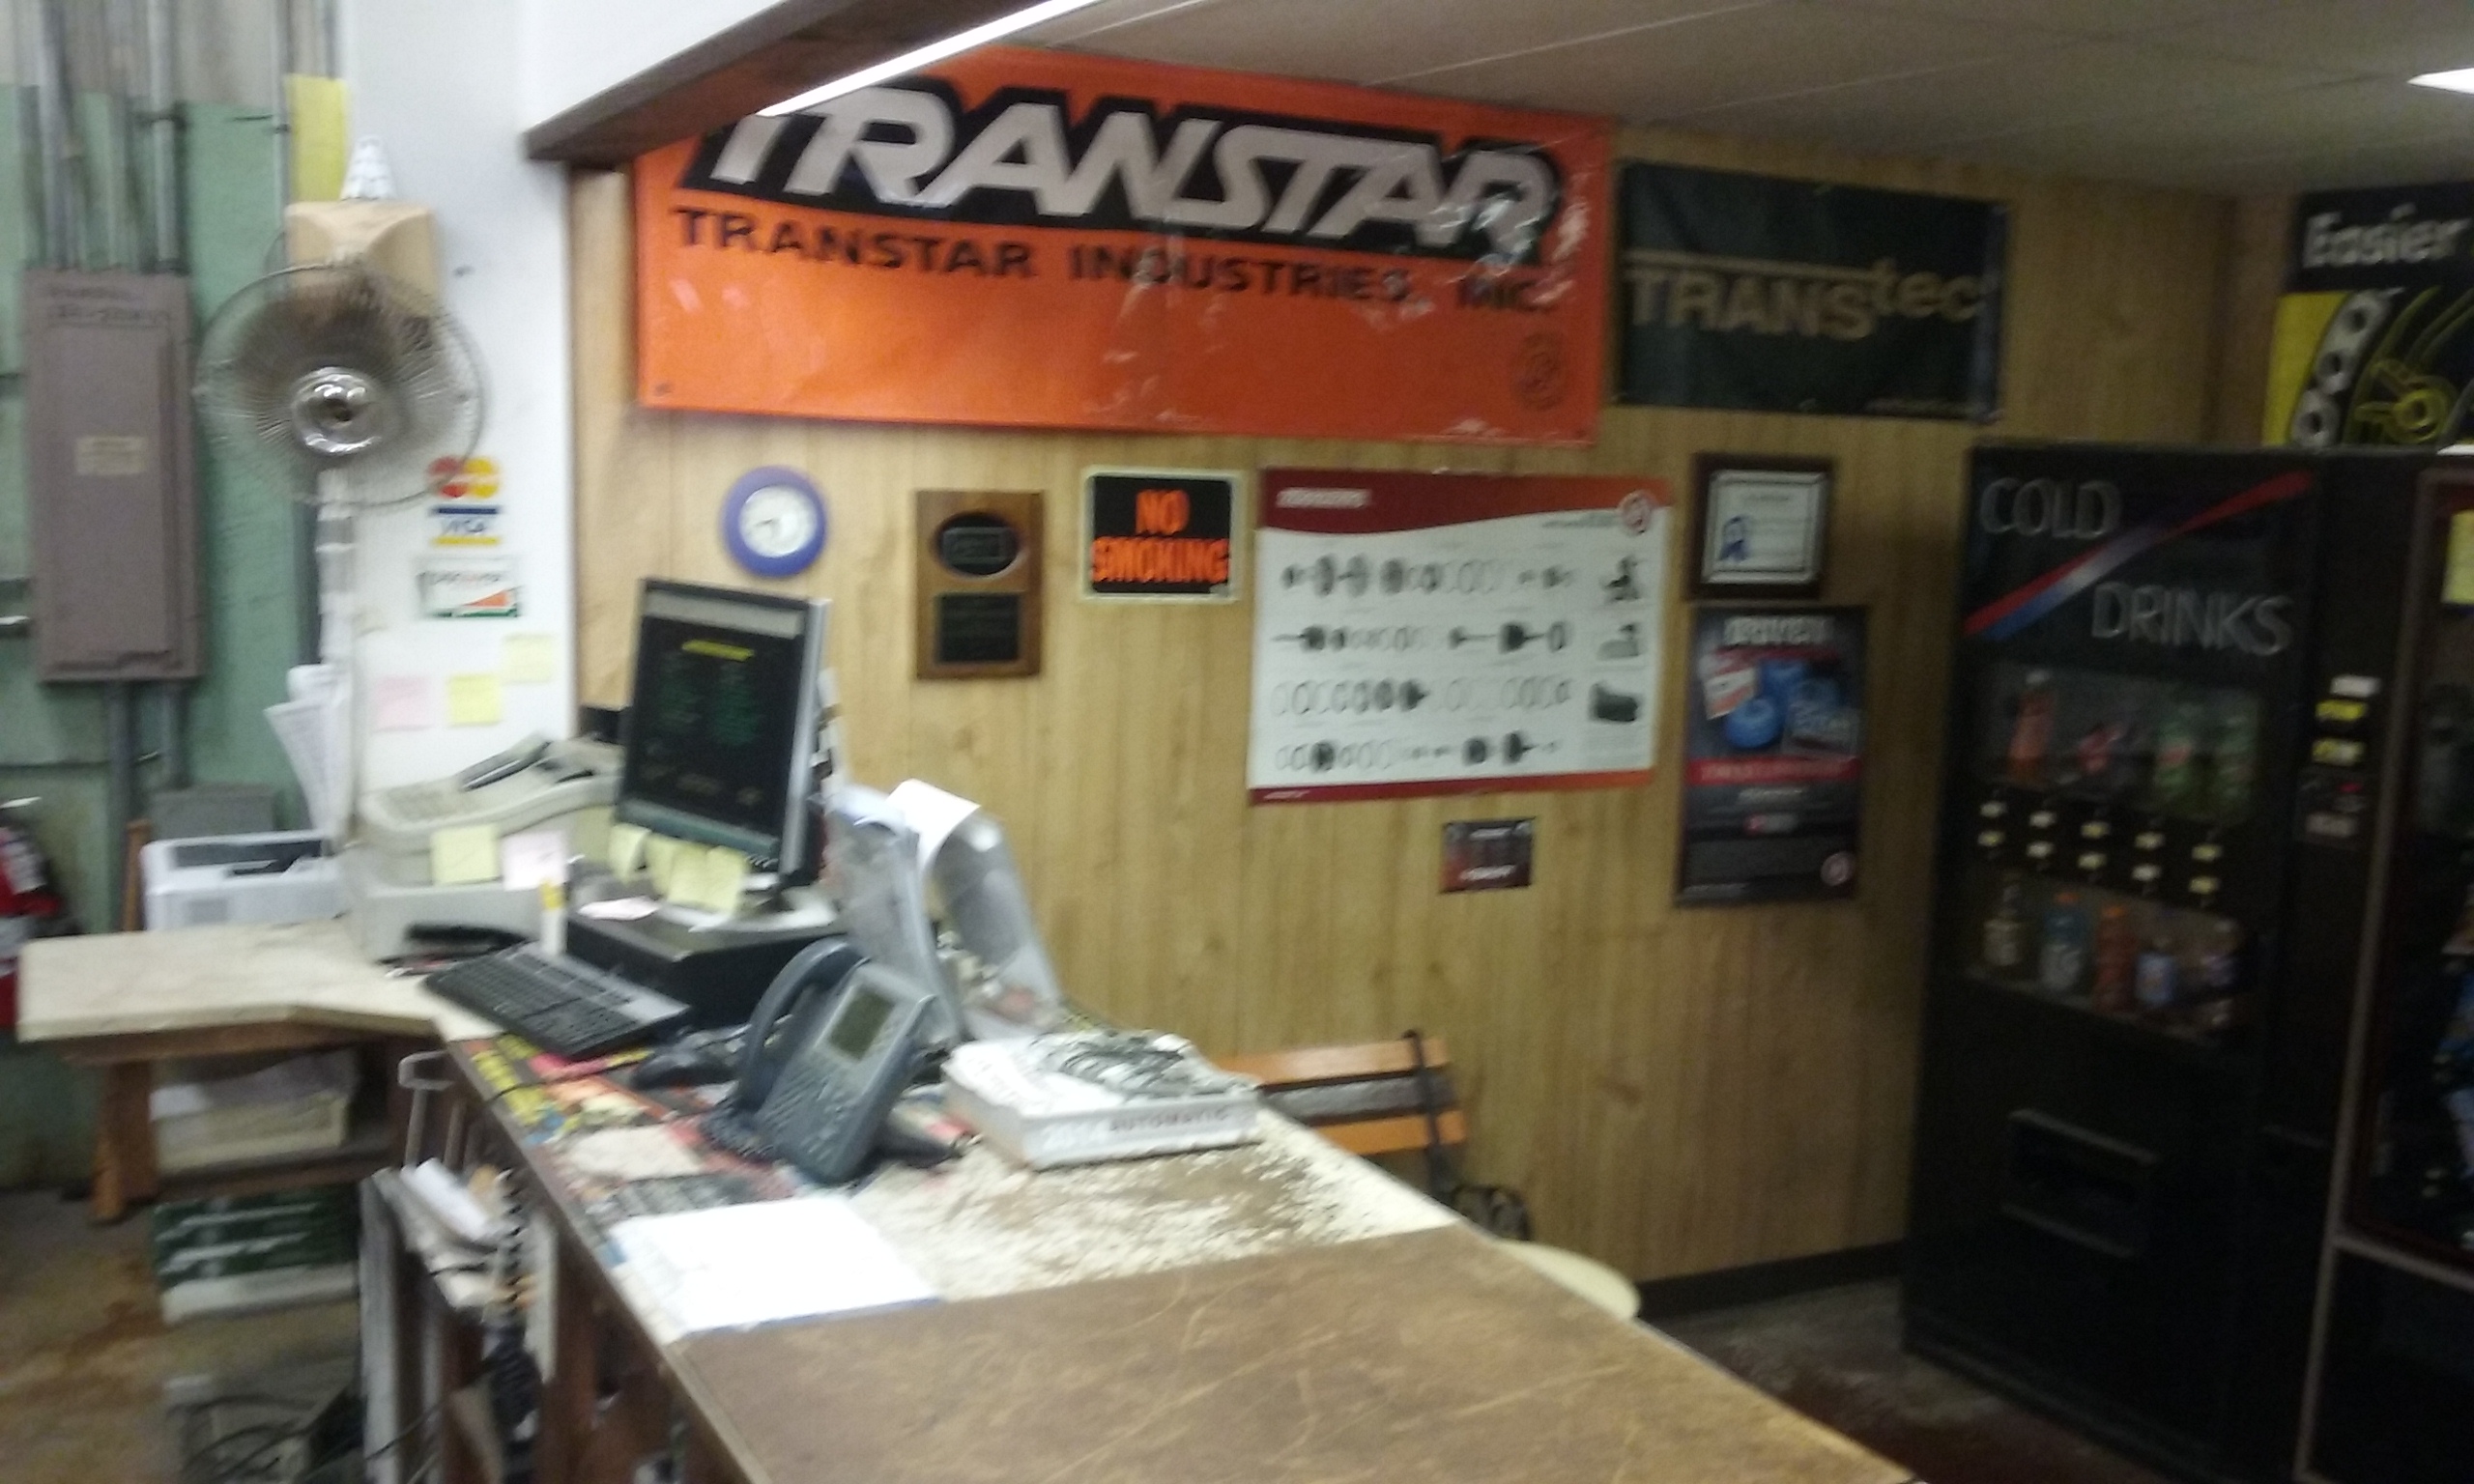 Transtar Industries - Cincinnati, OH 45246 - (800)543-2723 | ShowMeLocal.com